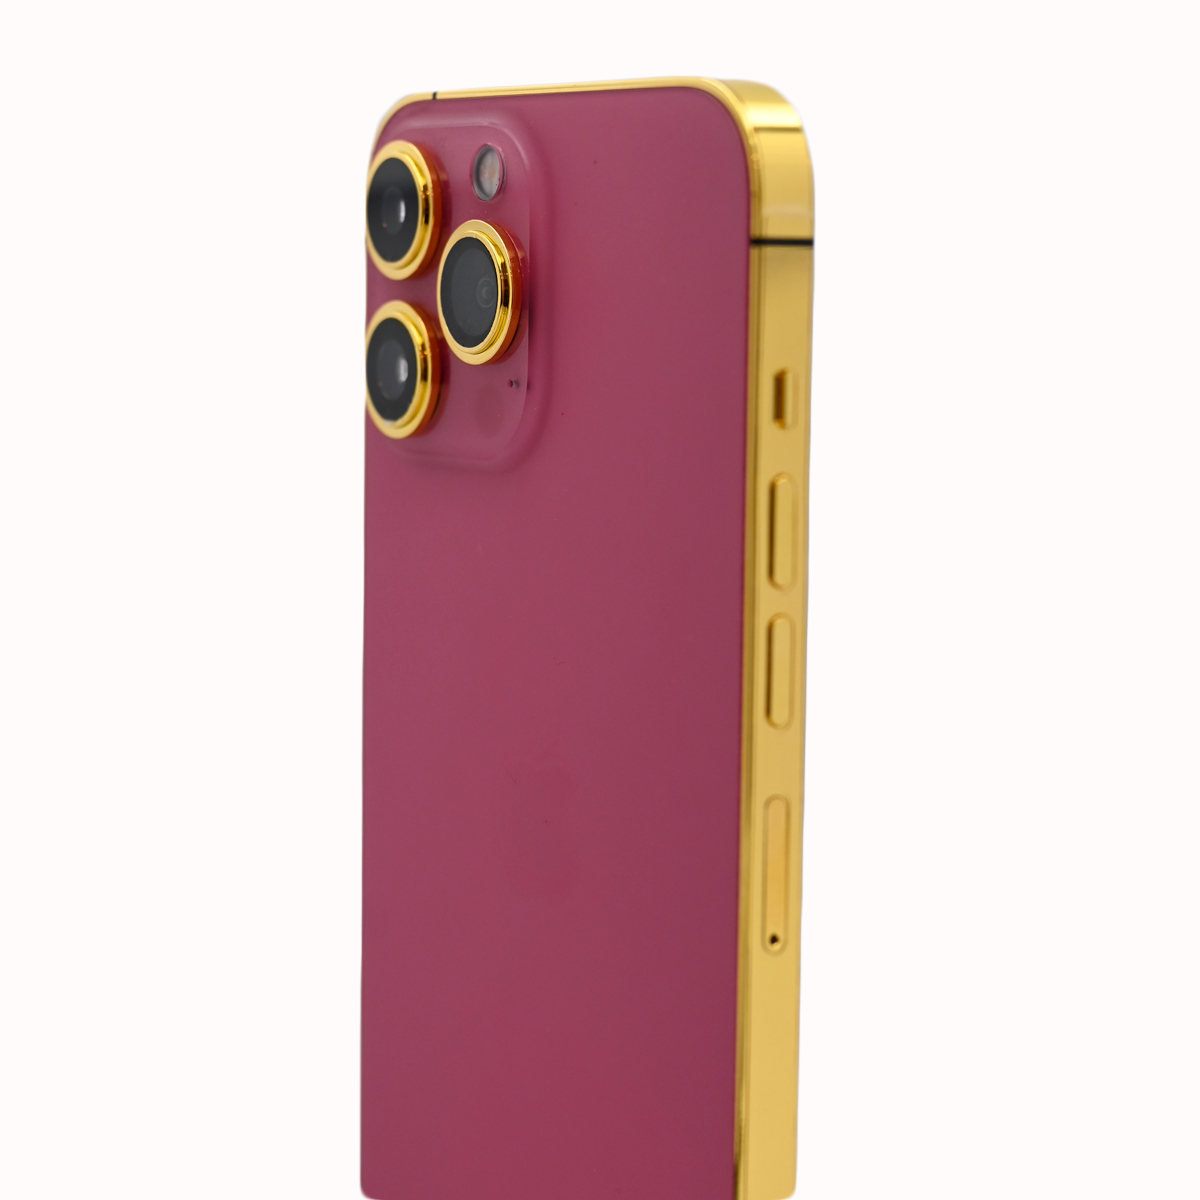 Caviar Luxury 24k Gold Frame Customized iPhone 13 Pro Max 1TB, Pink